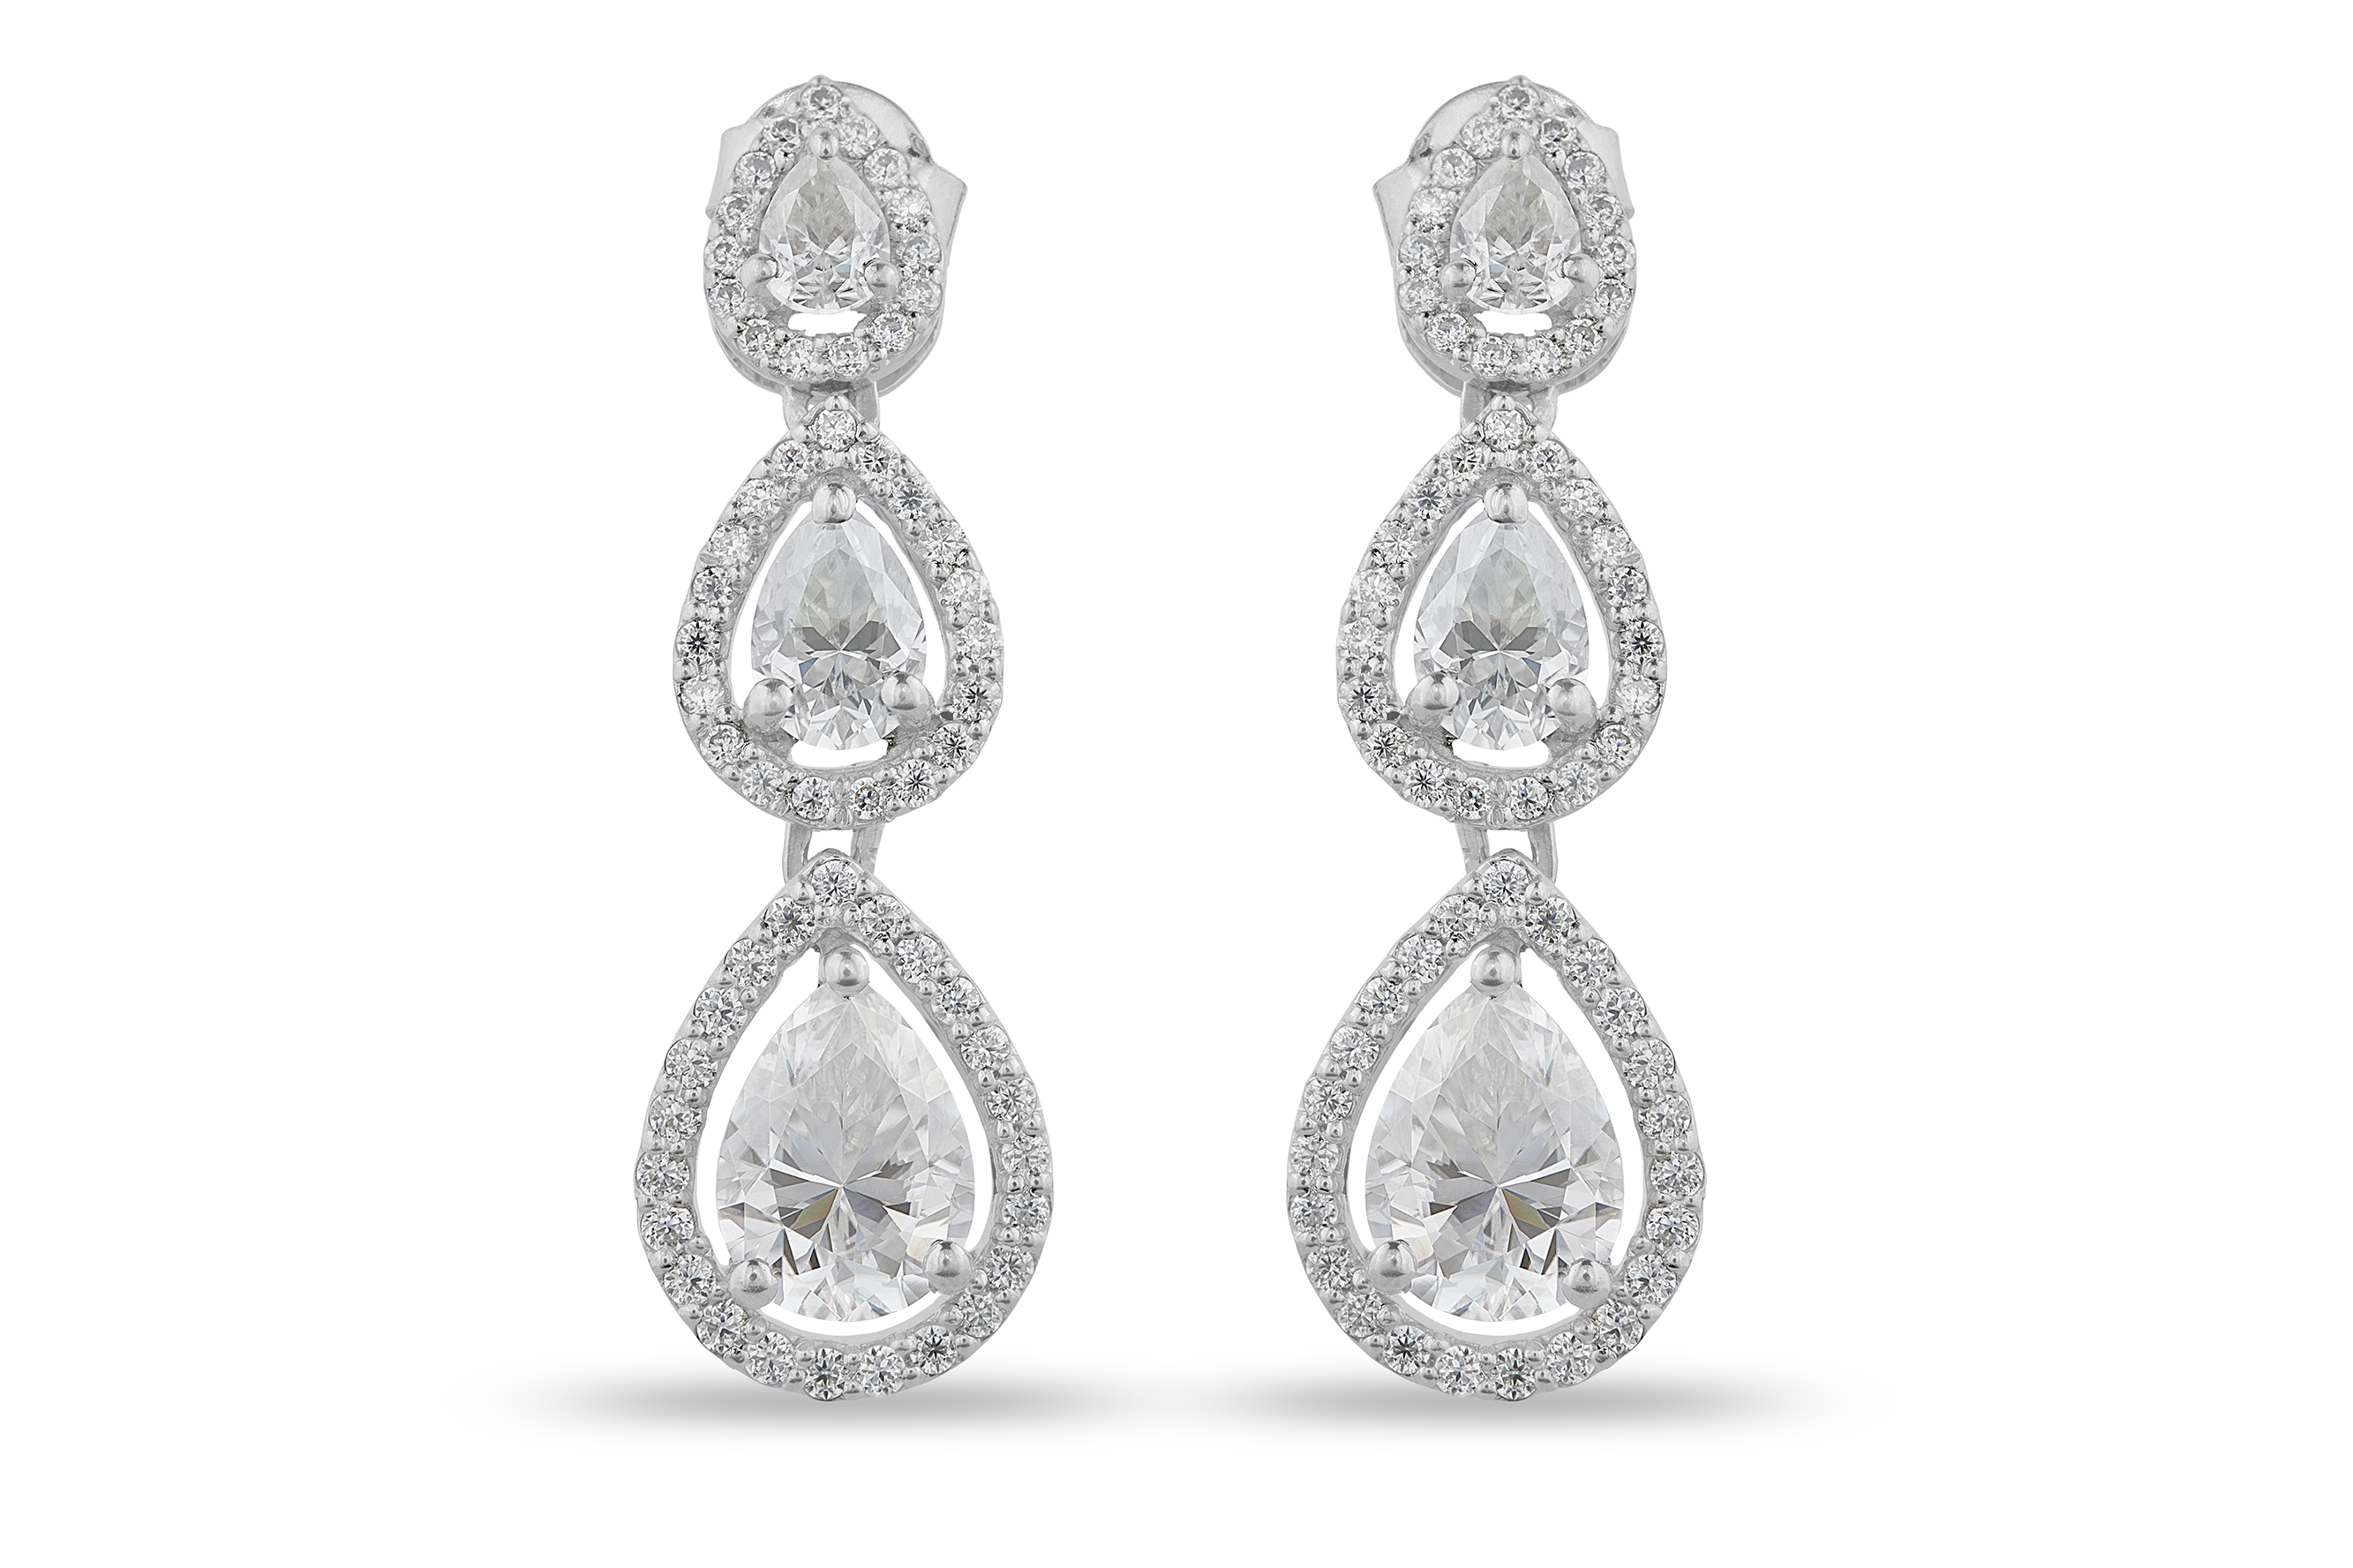 Shop Diamond Drop Earrings India for Girls - Anemoii